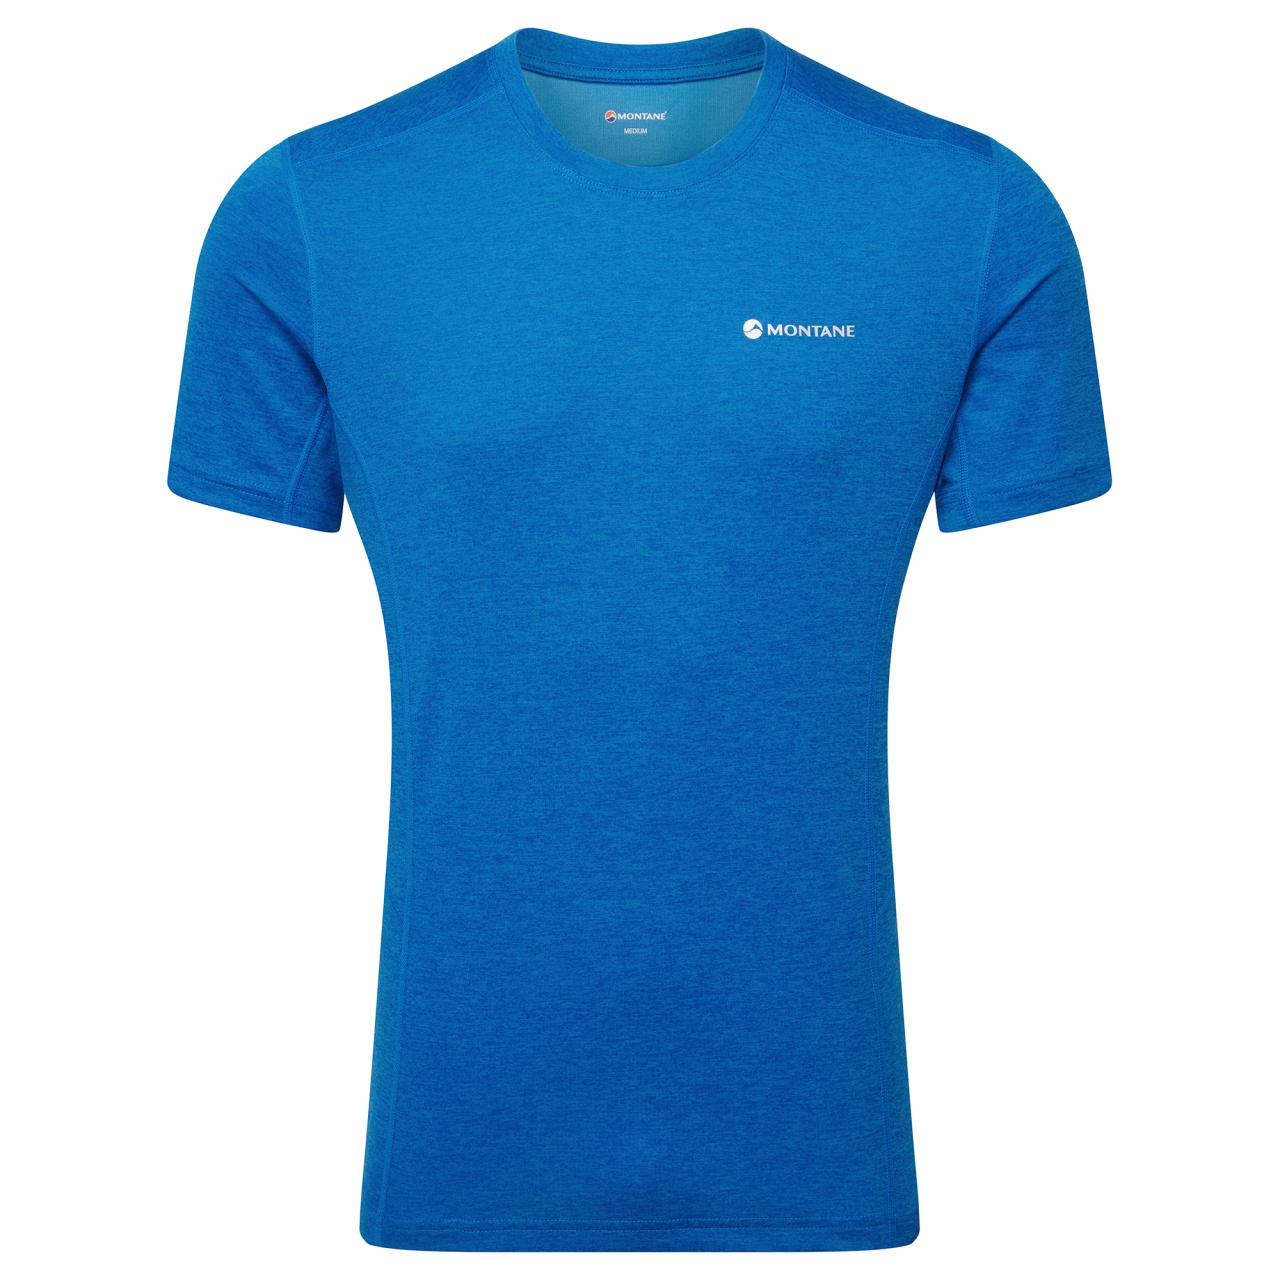 Montane pánské triko Dart T-Shirt Barva: neptune blue, Velikost: XL